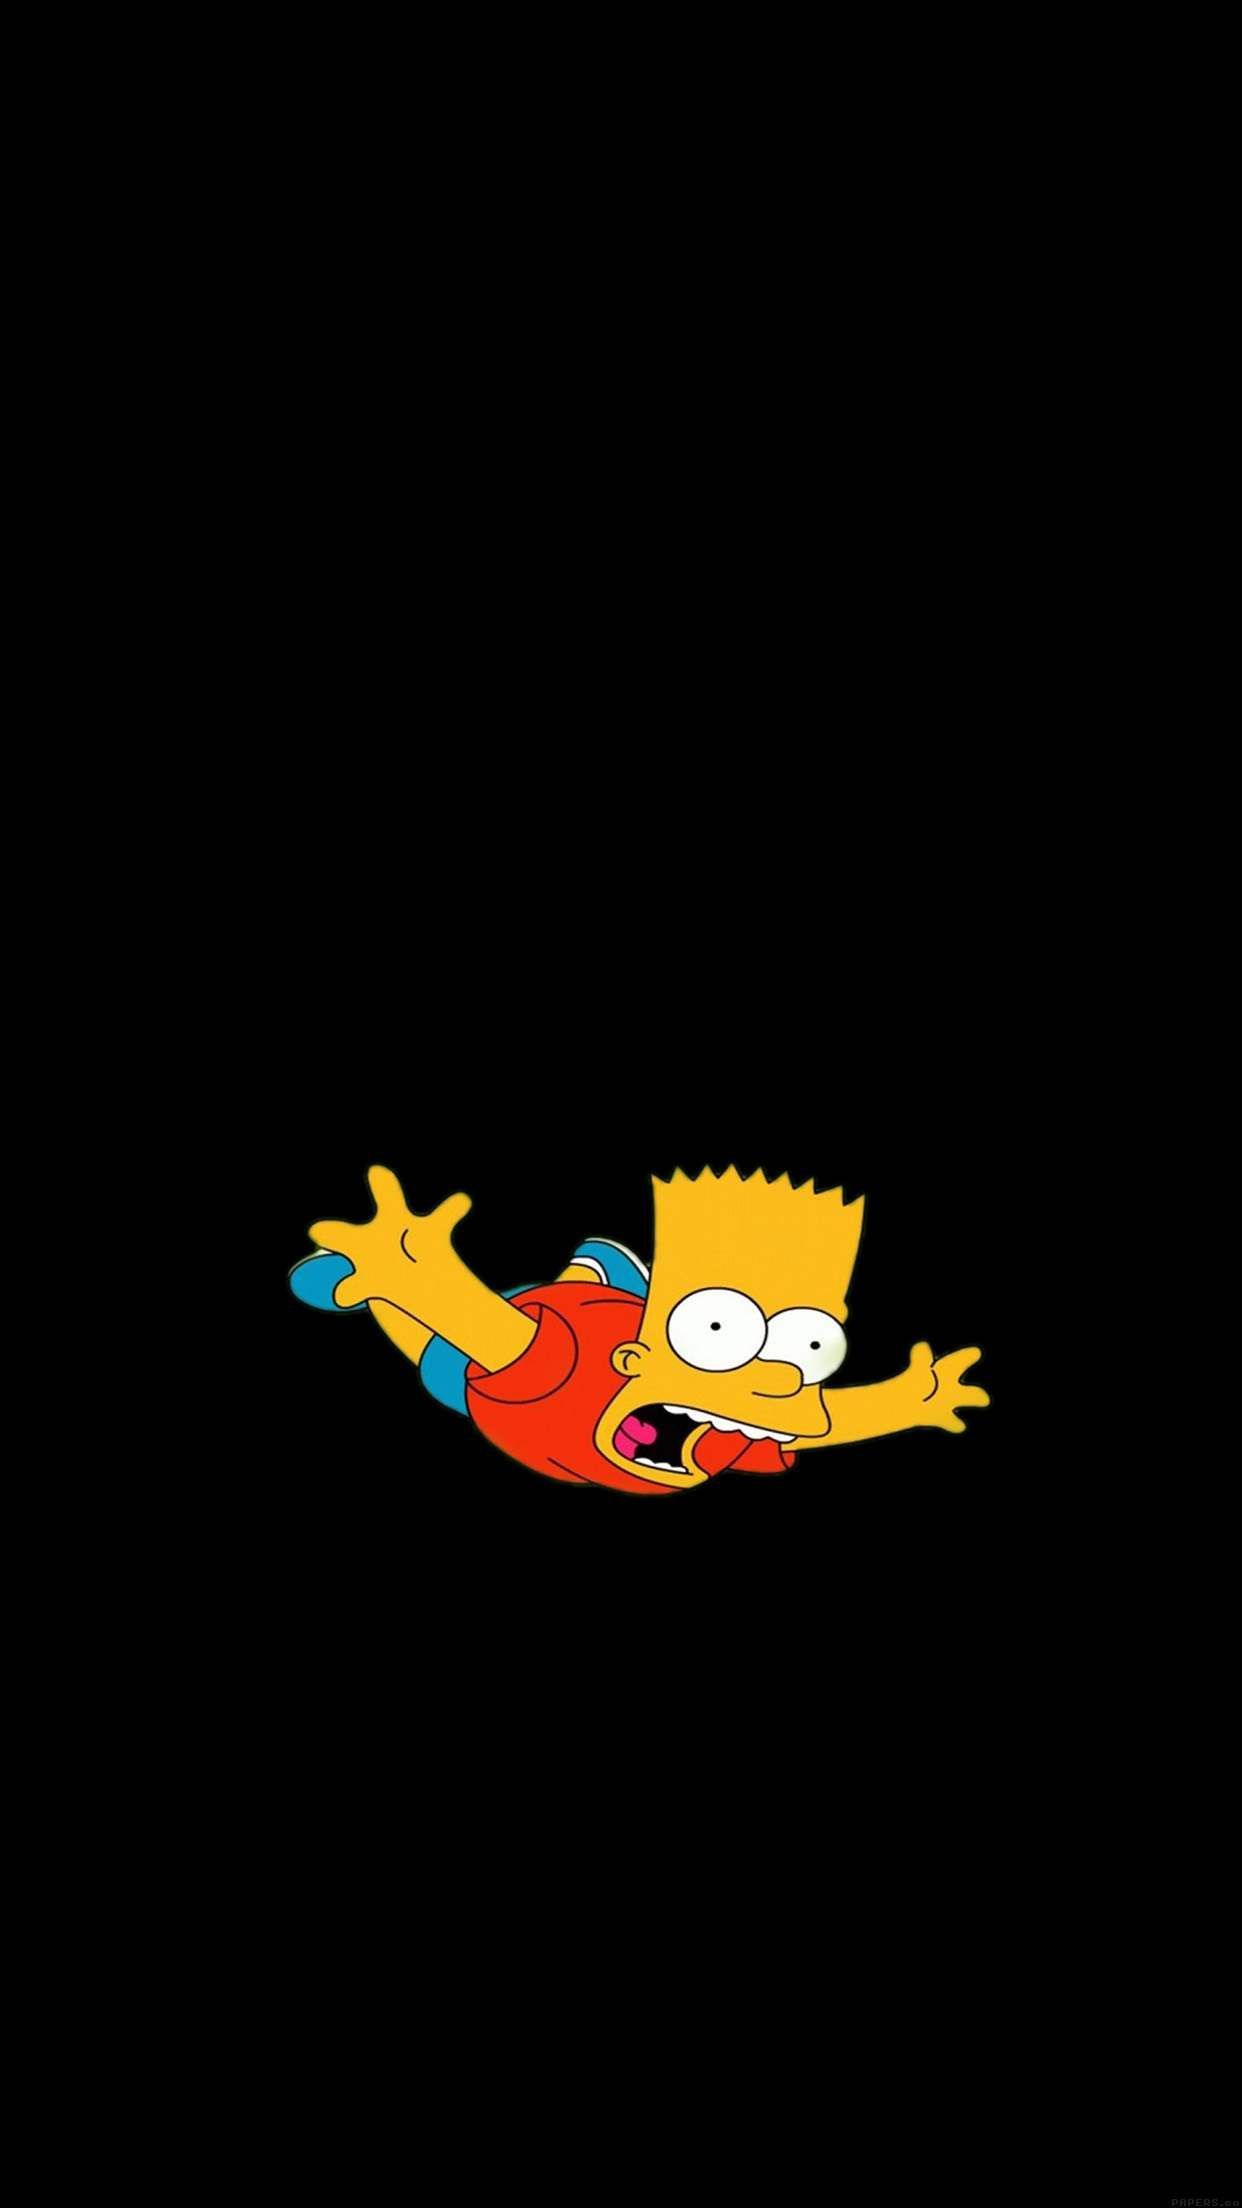 Aesthetic Bart Simpson iPhone Wallpaper